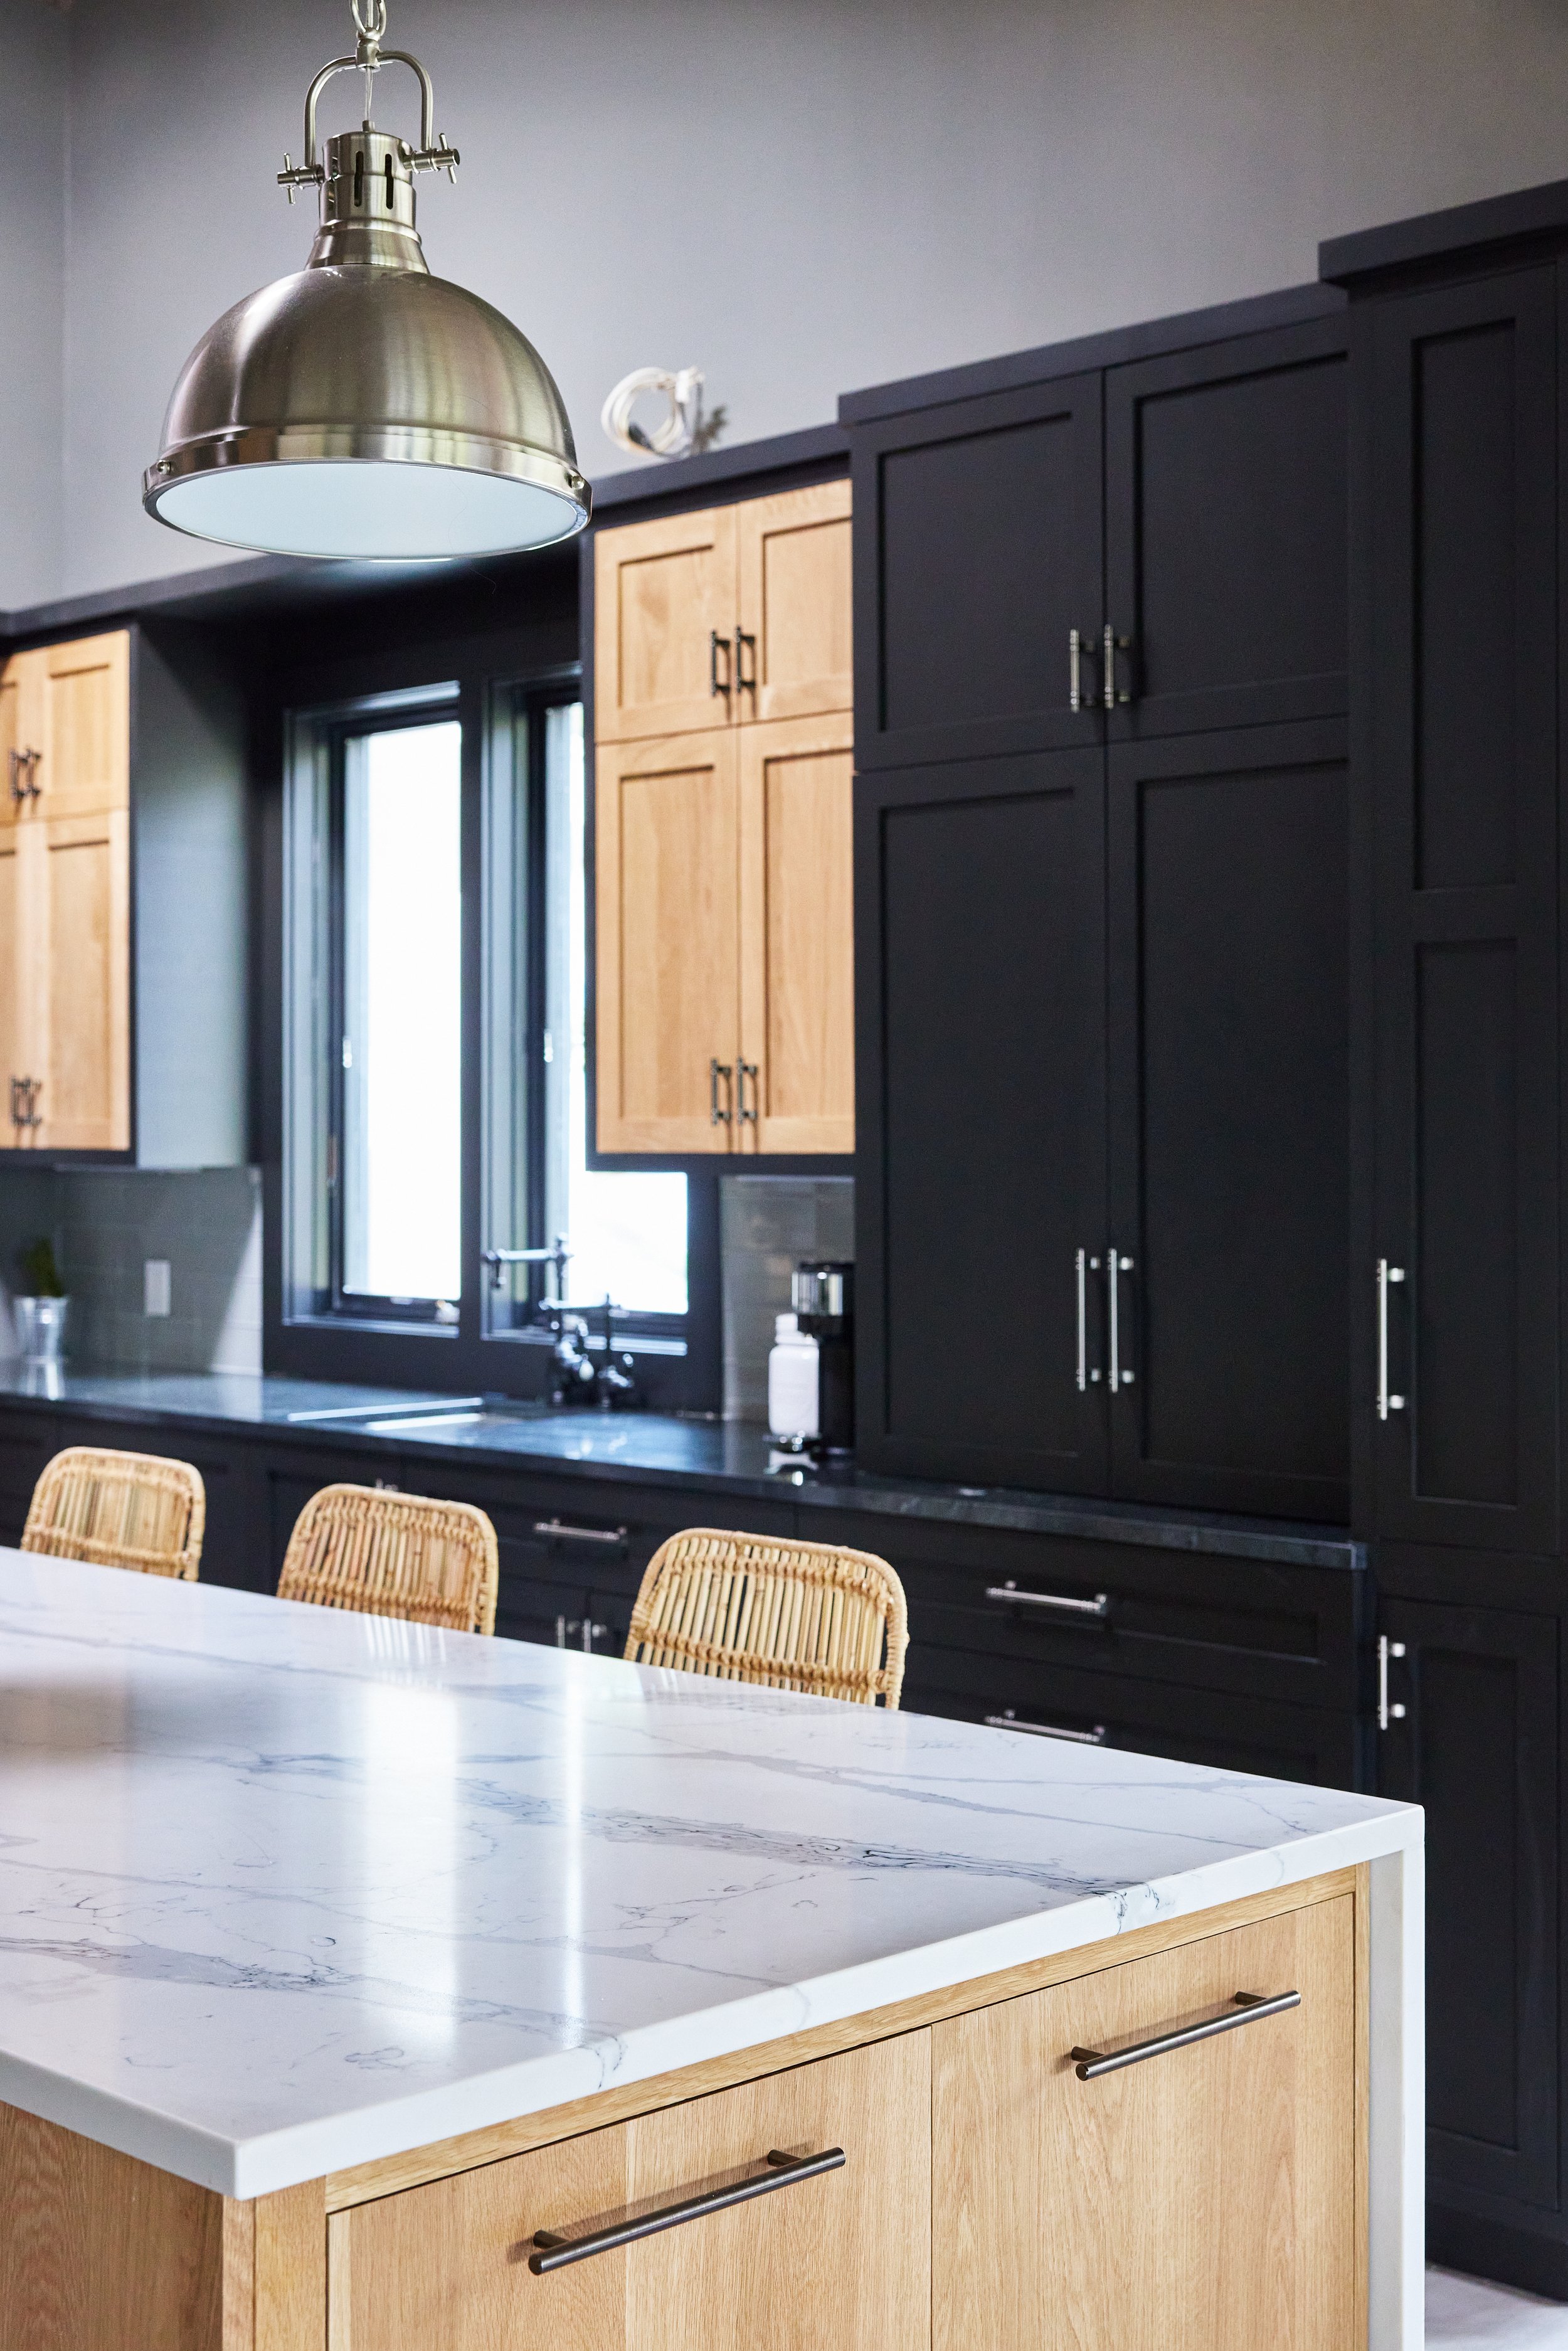 Chris ODell's House Kitchen Cabinets island details vertical.jpg